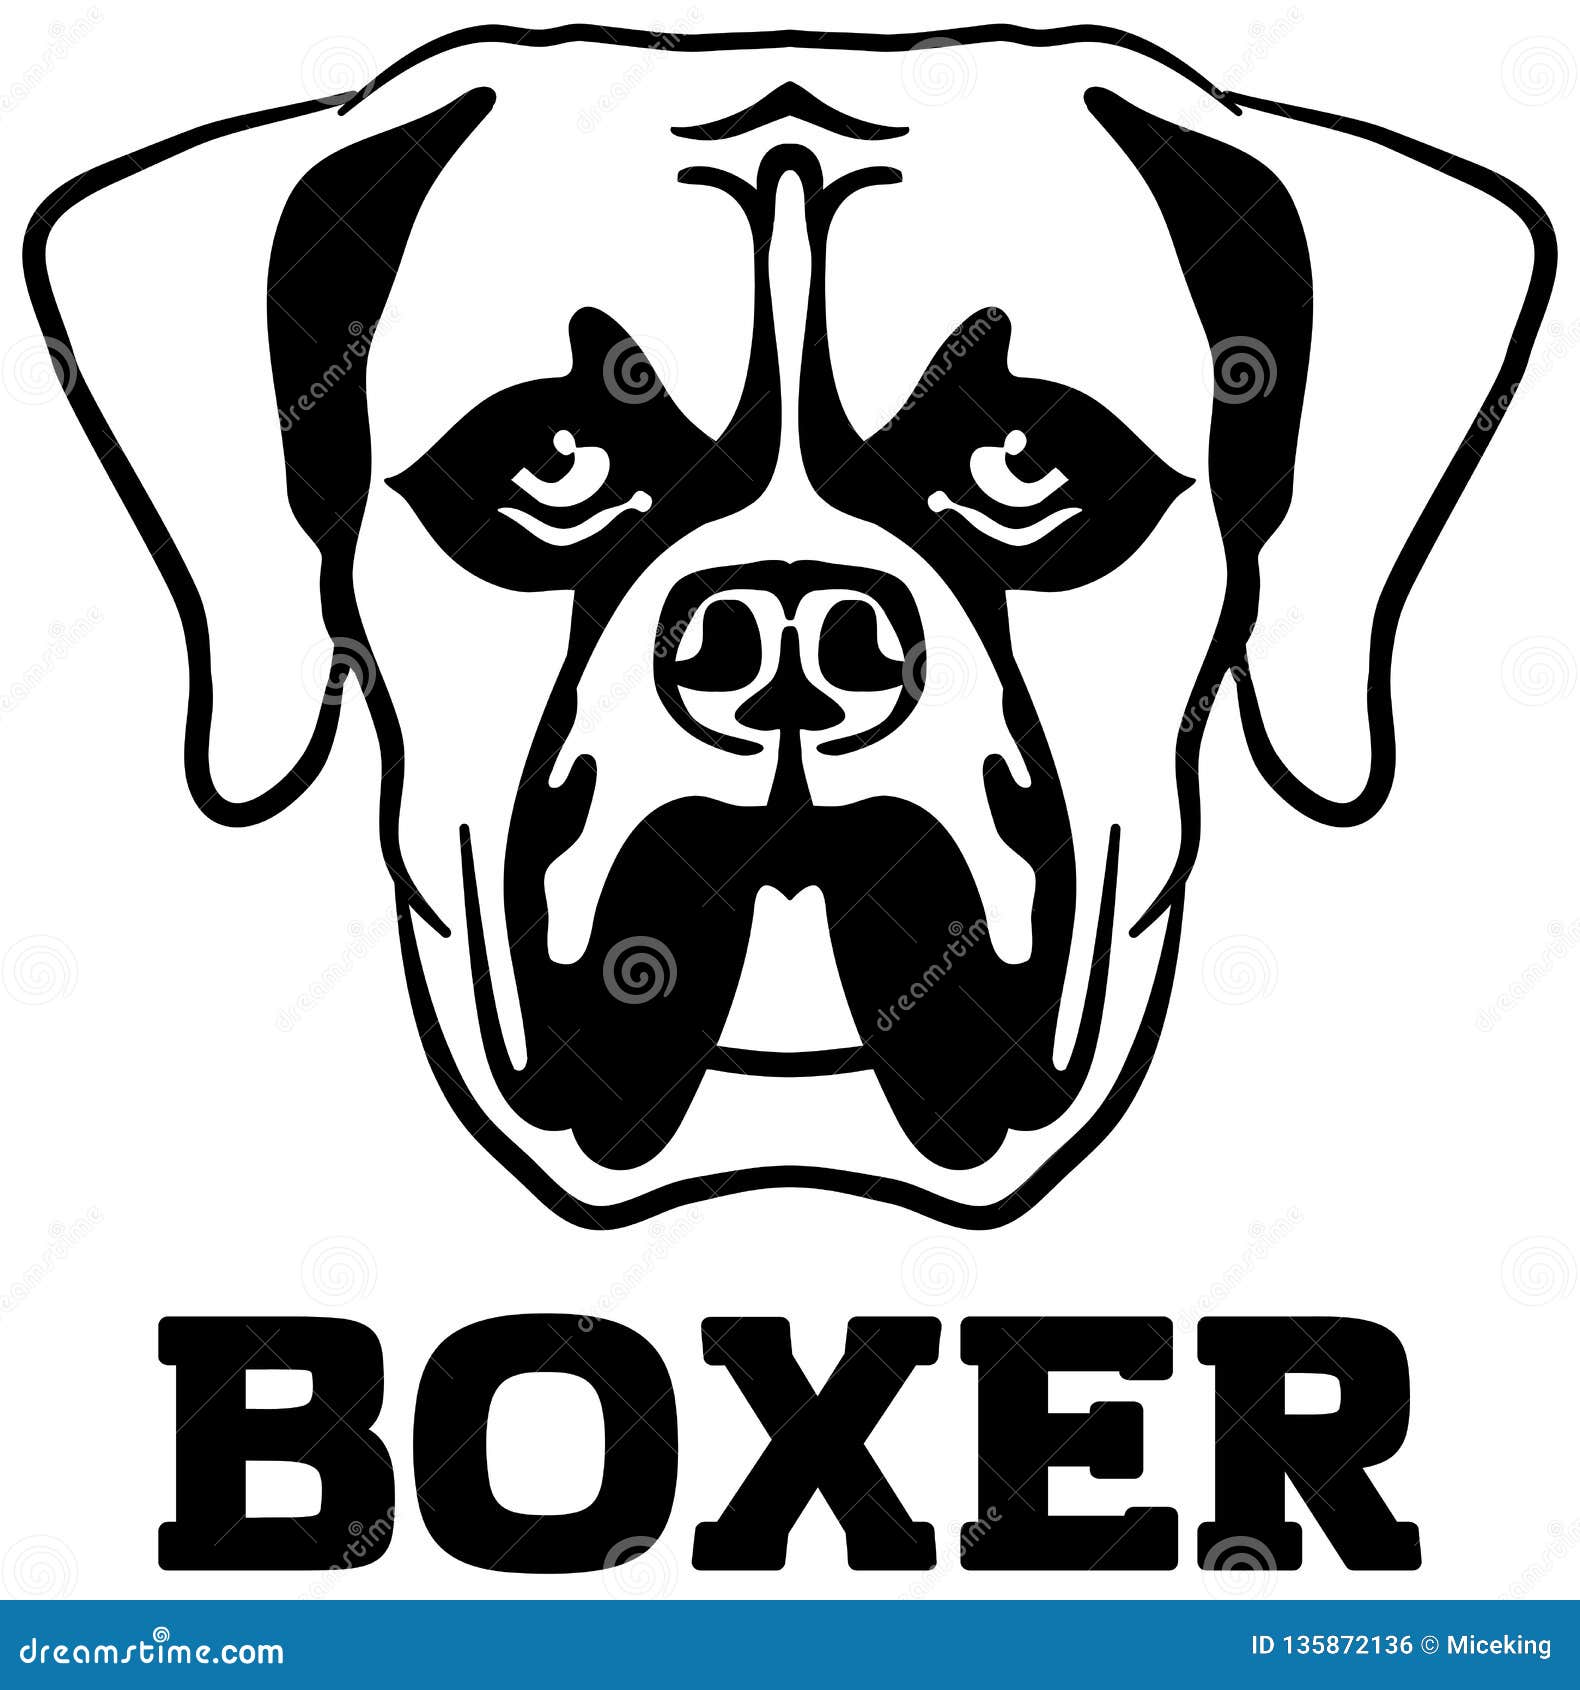 Boxer head black and white stock vector. Illustration of logo - 135872136